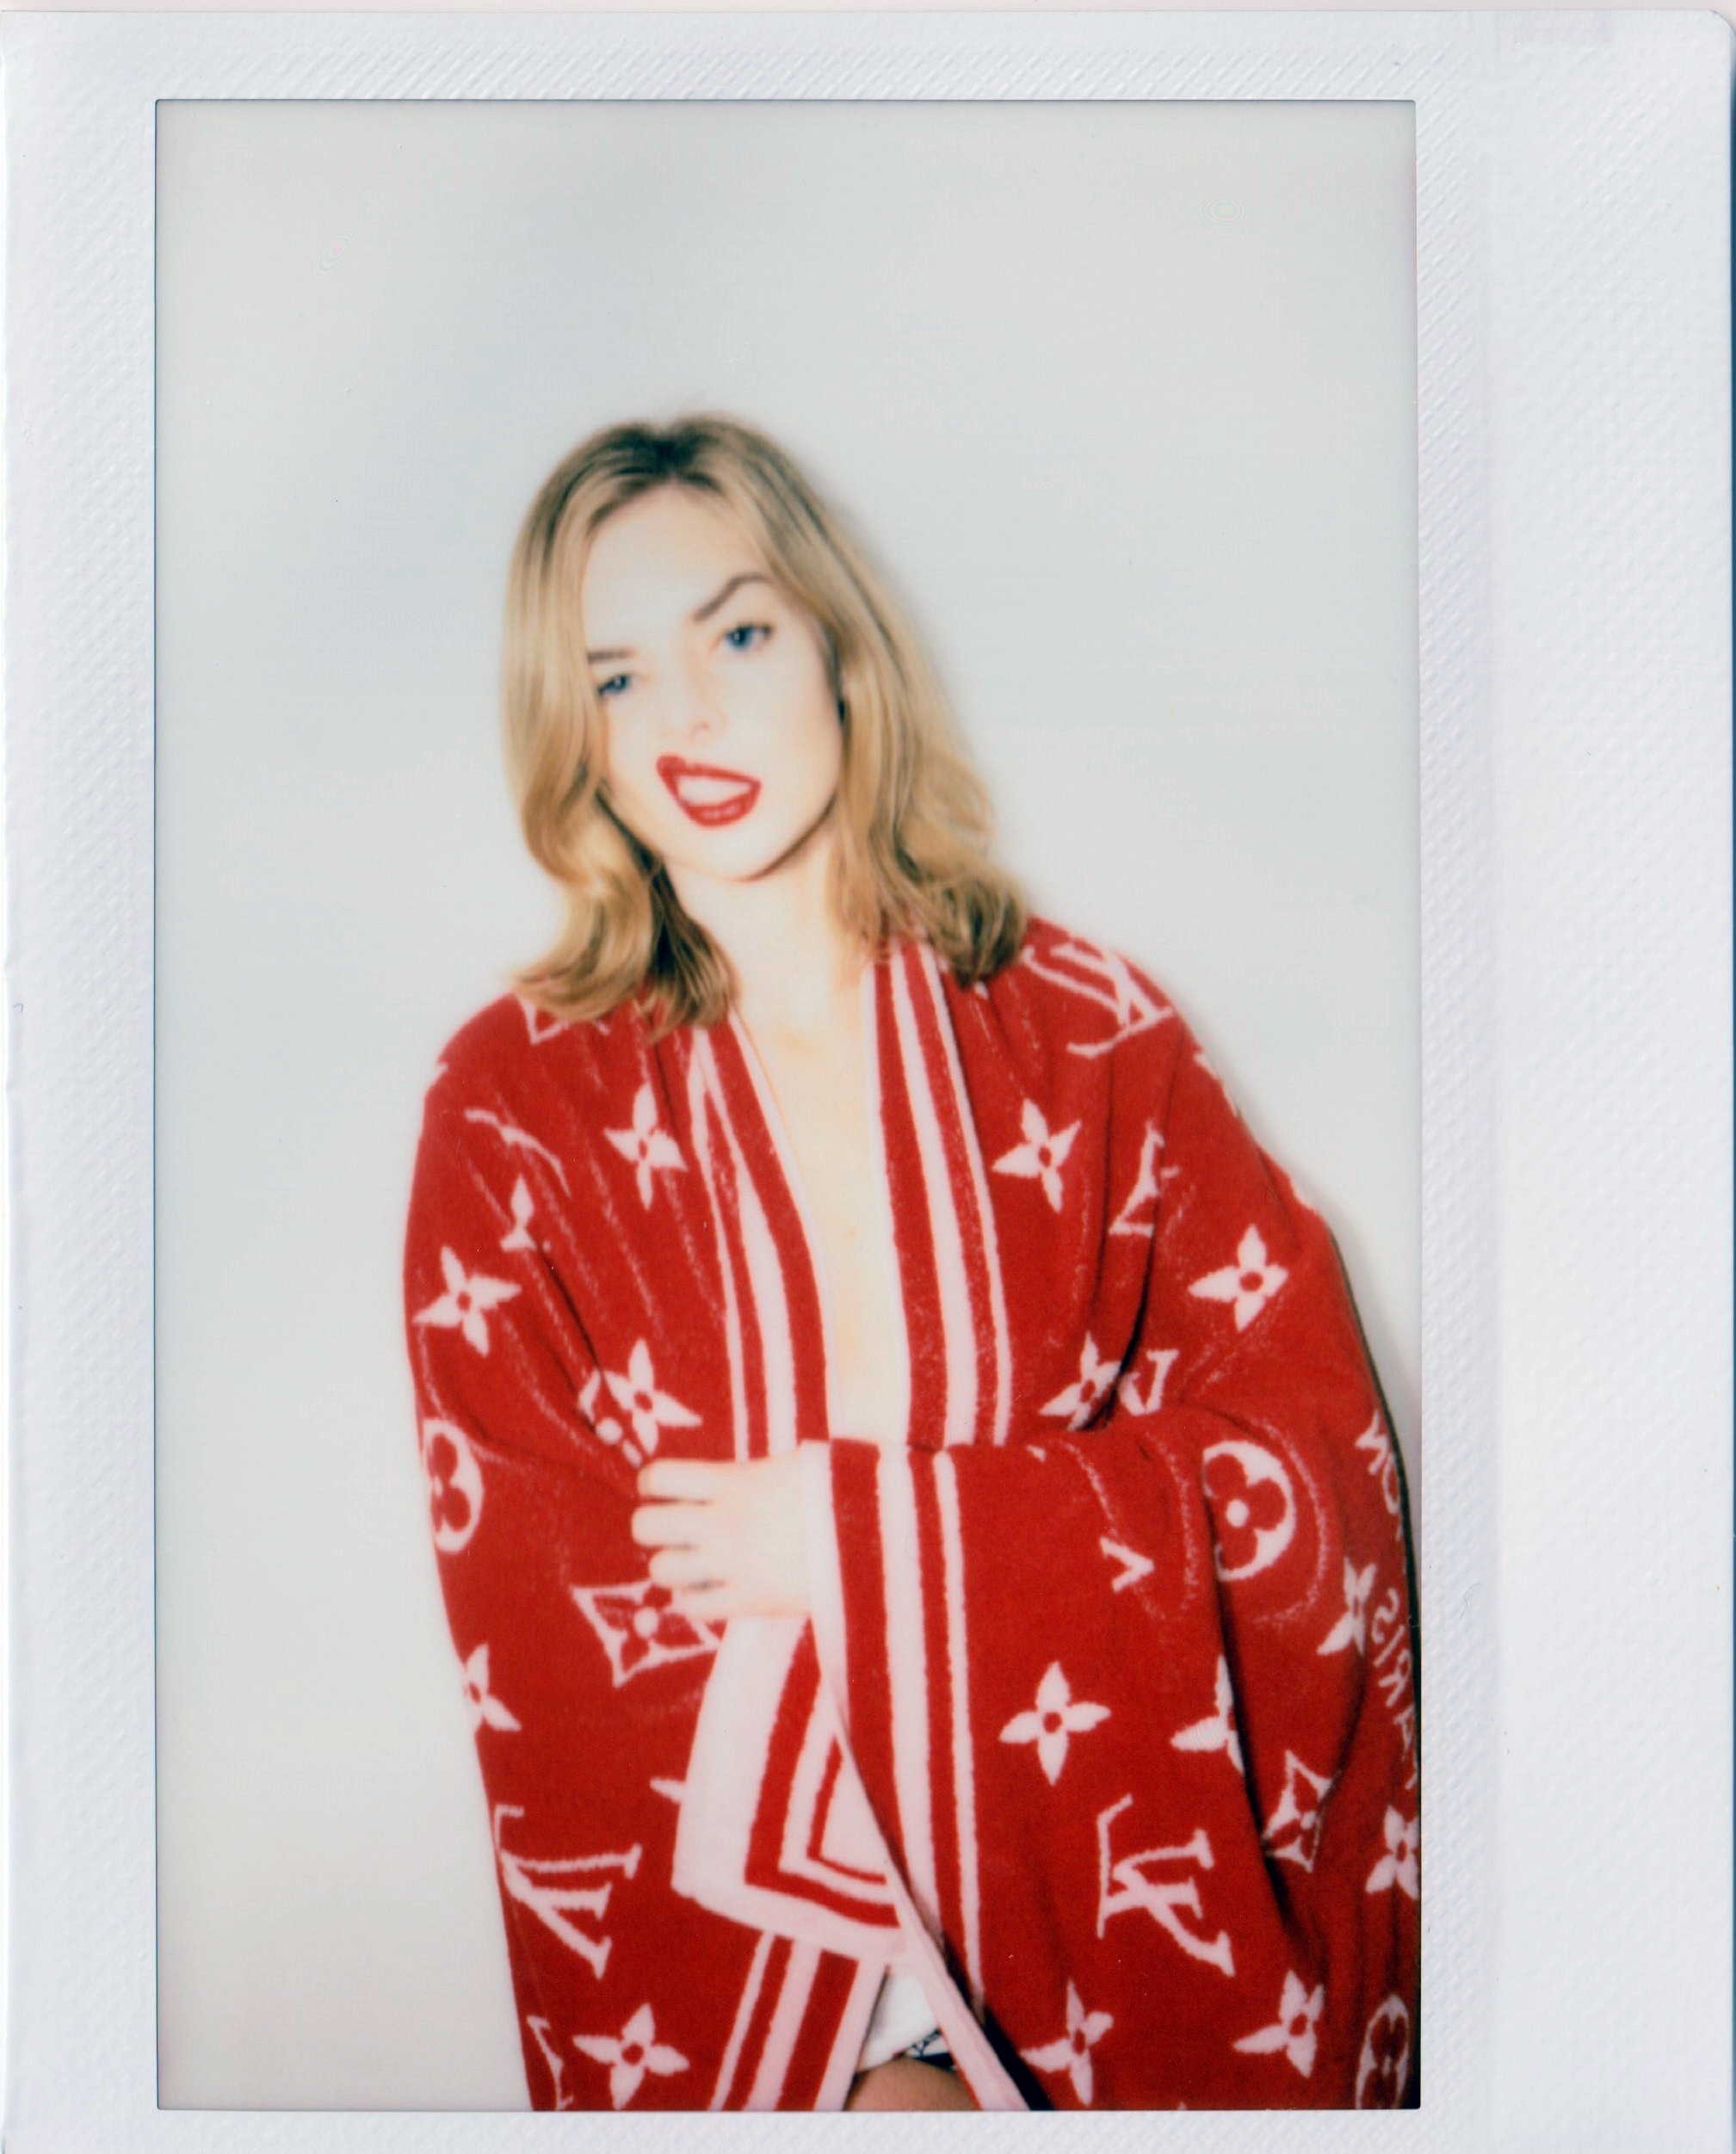 Photos n°6 : Samara Weaving Polaroids!